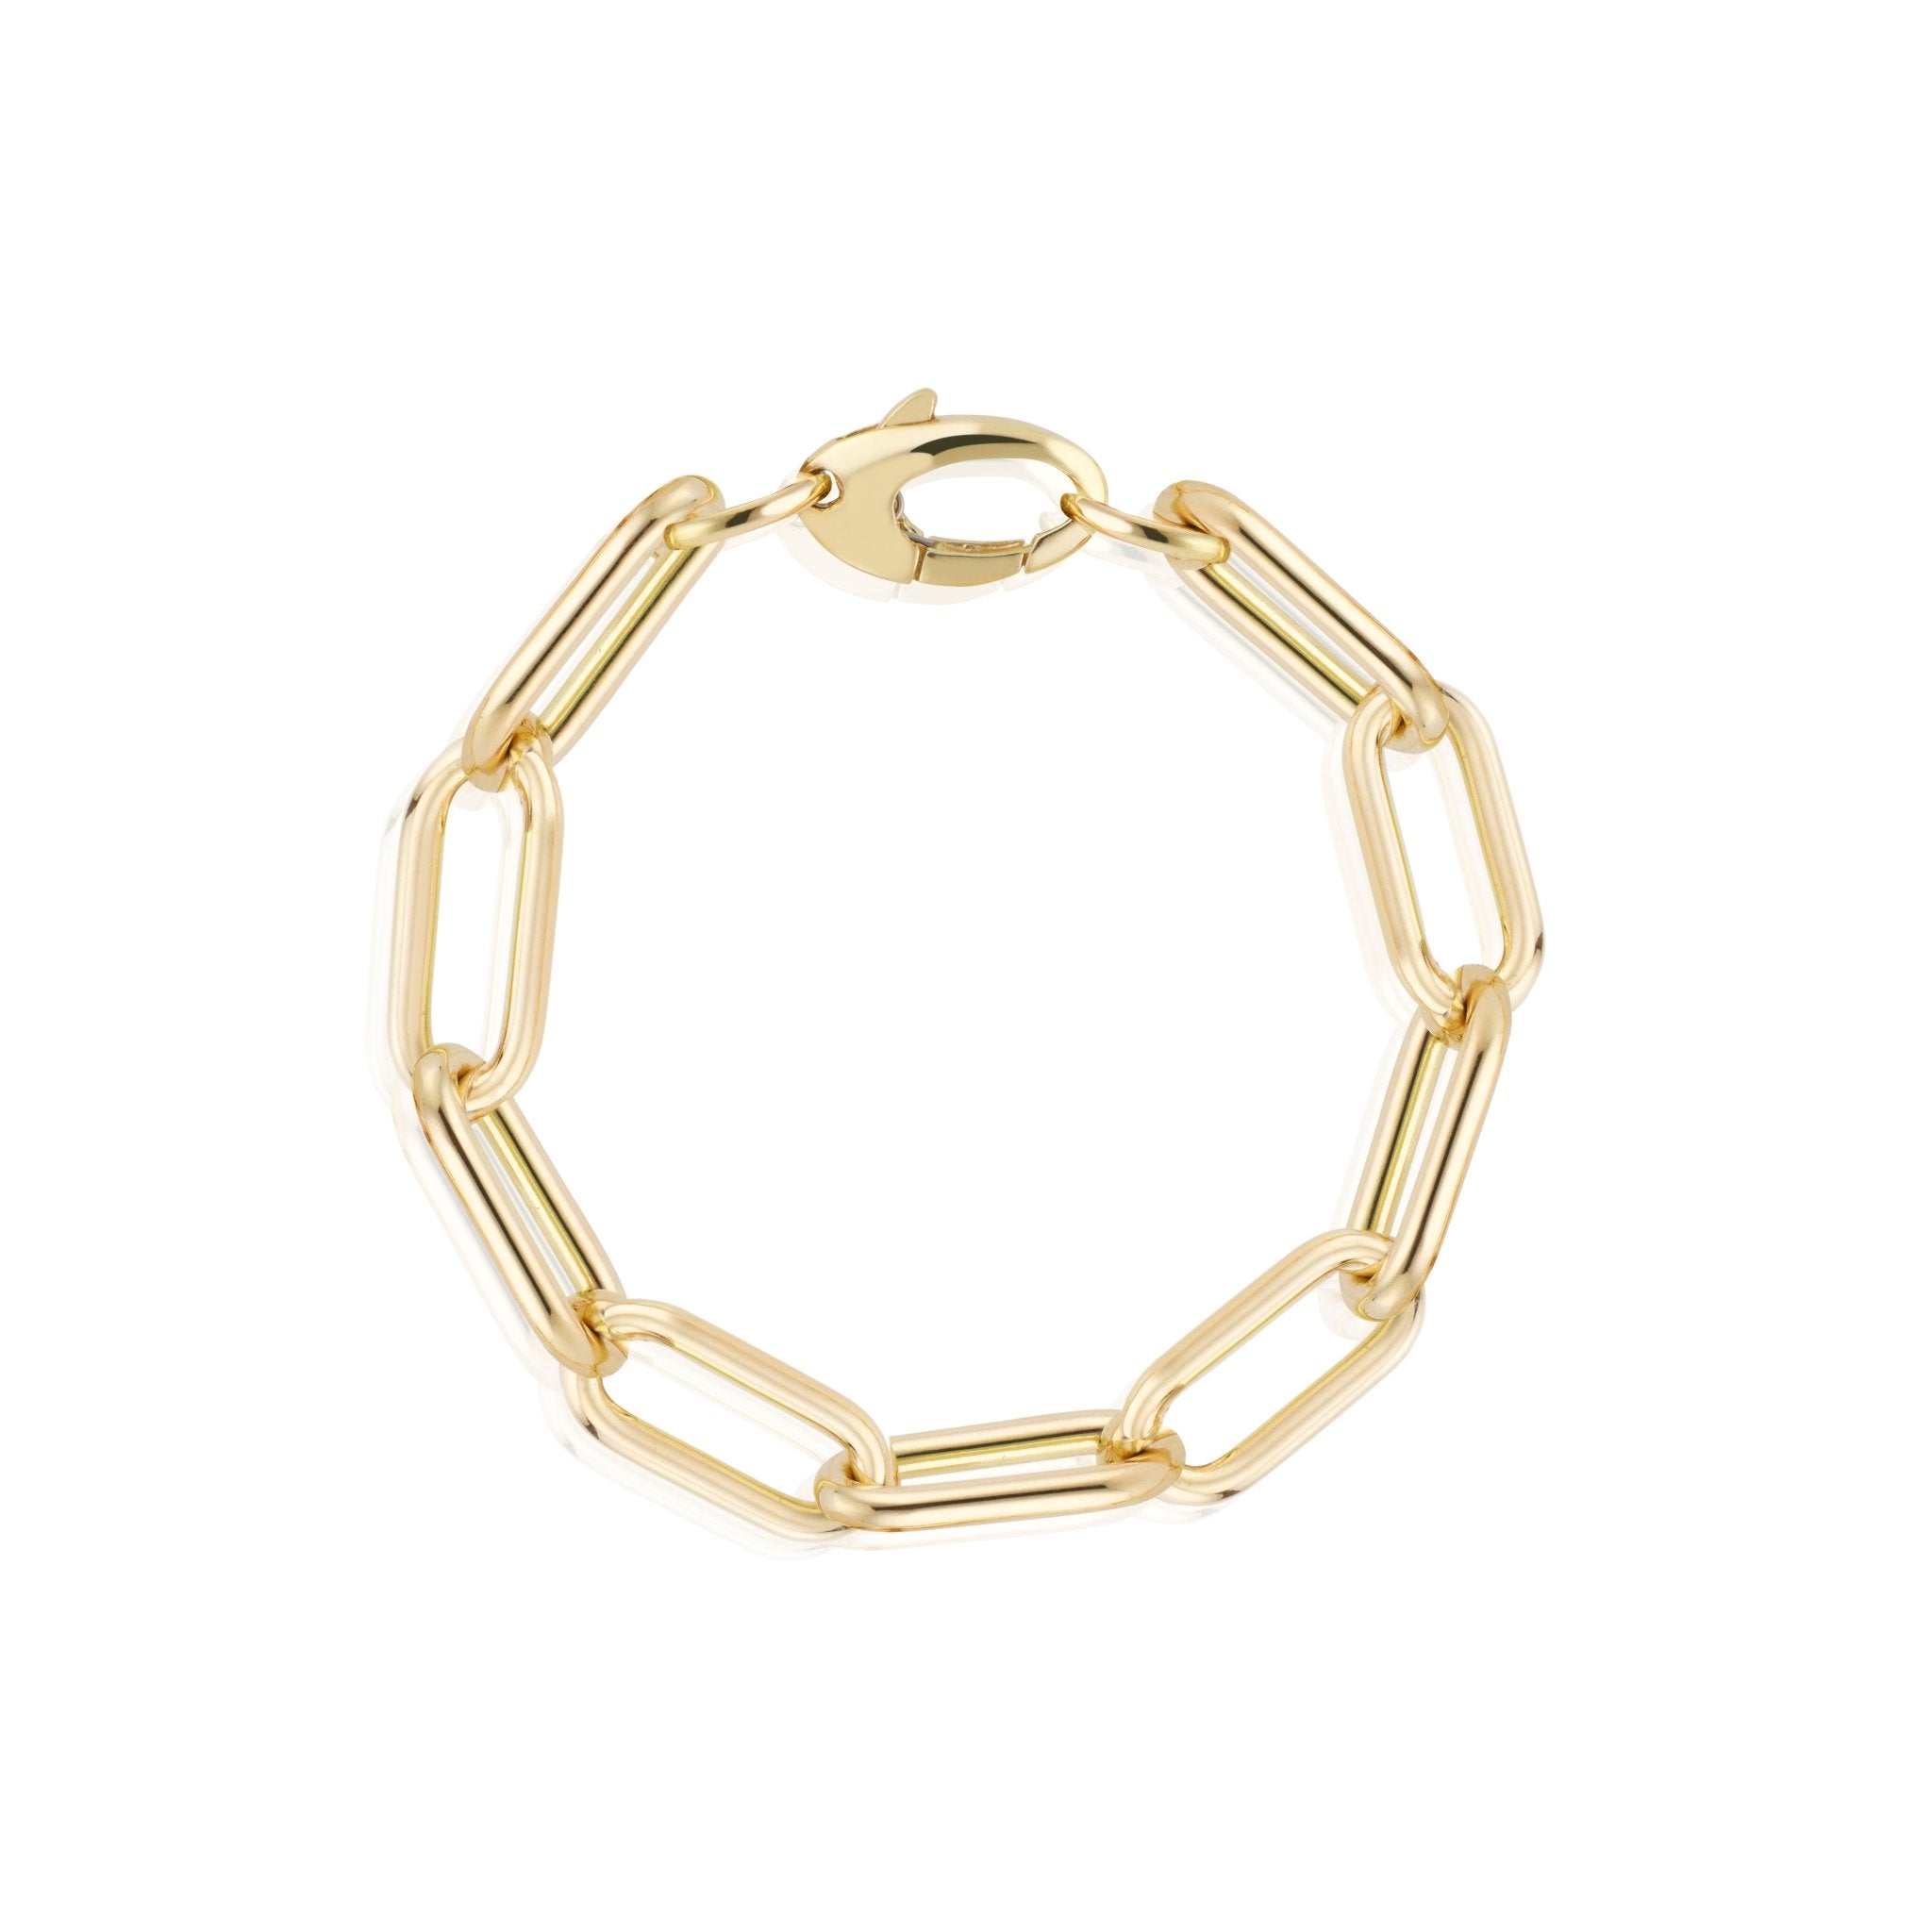 14K Gold Thick Oval Link Bracelet - Nolita